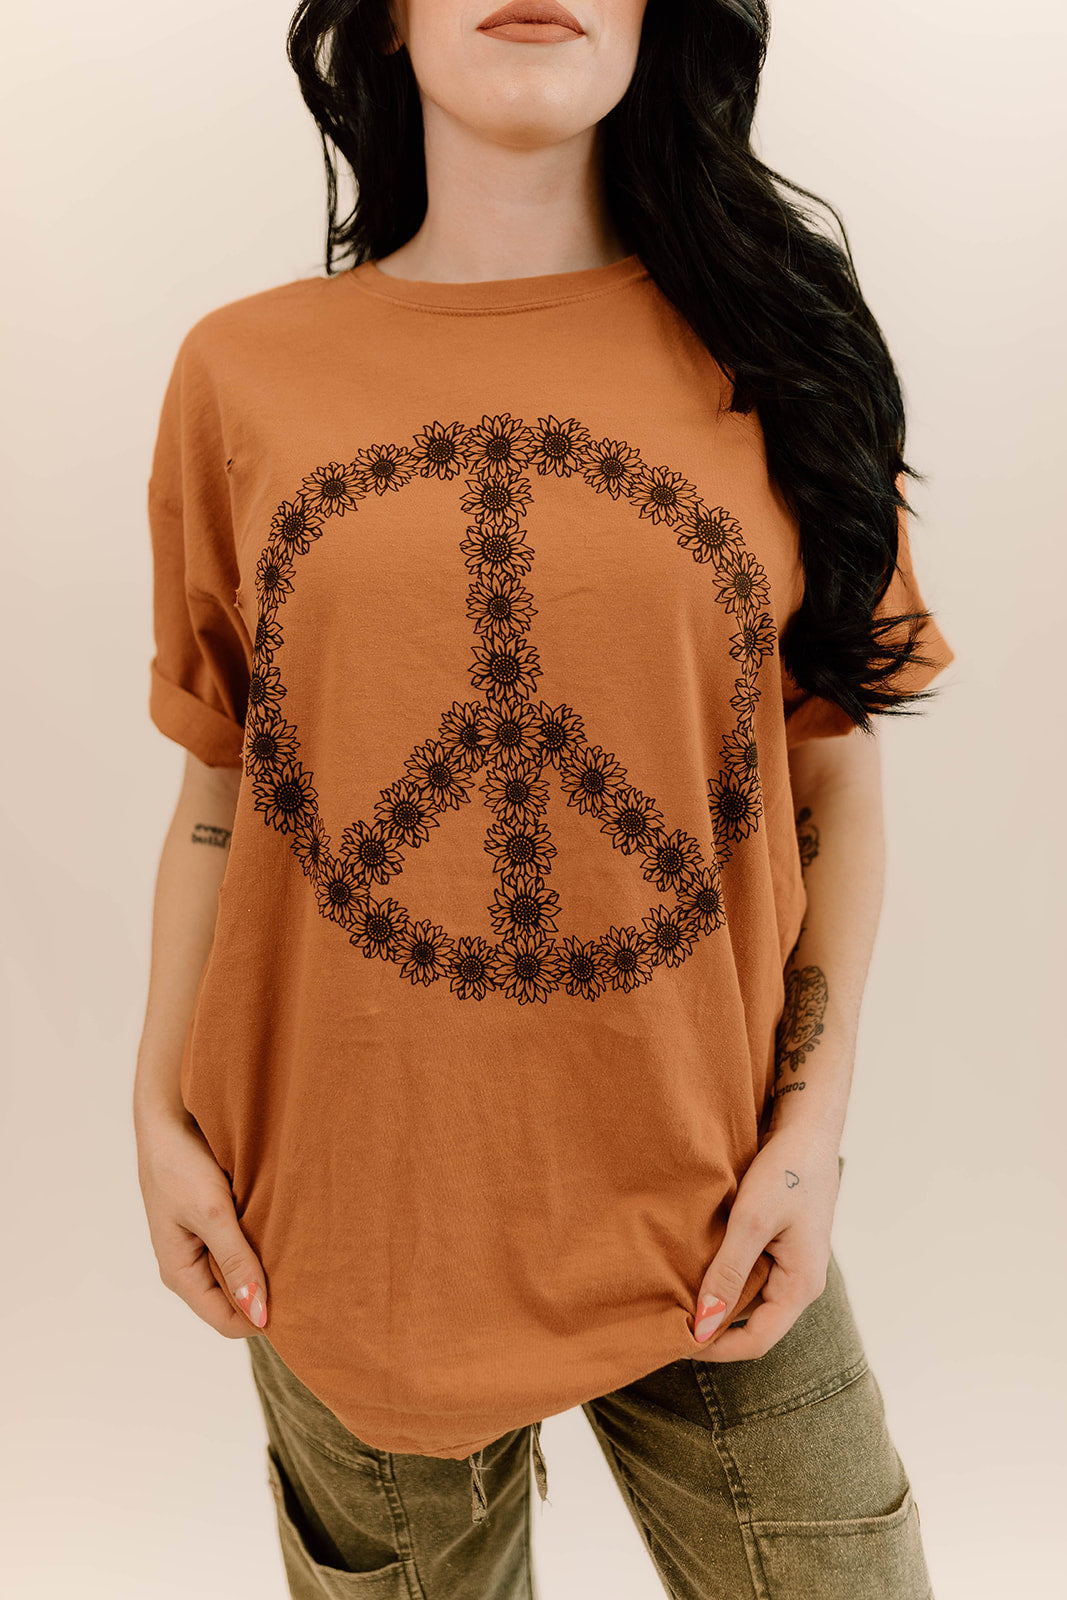 Sunflower Peace Sign Distressed Tee/Sweatshirt